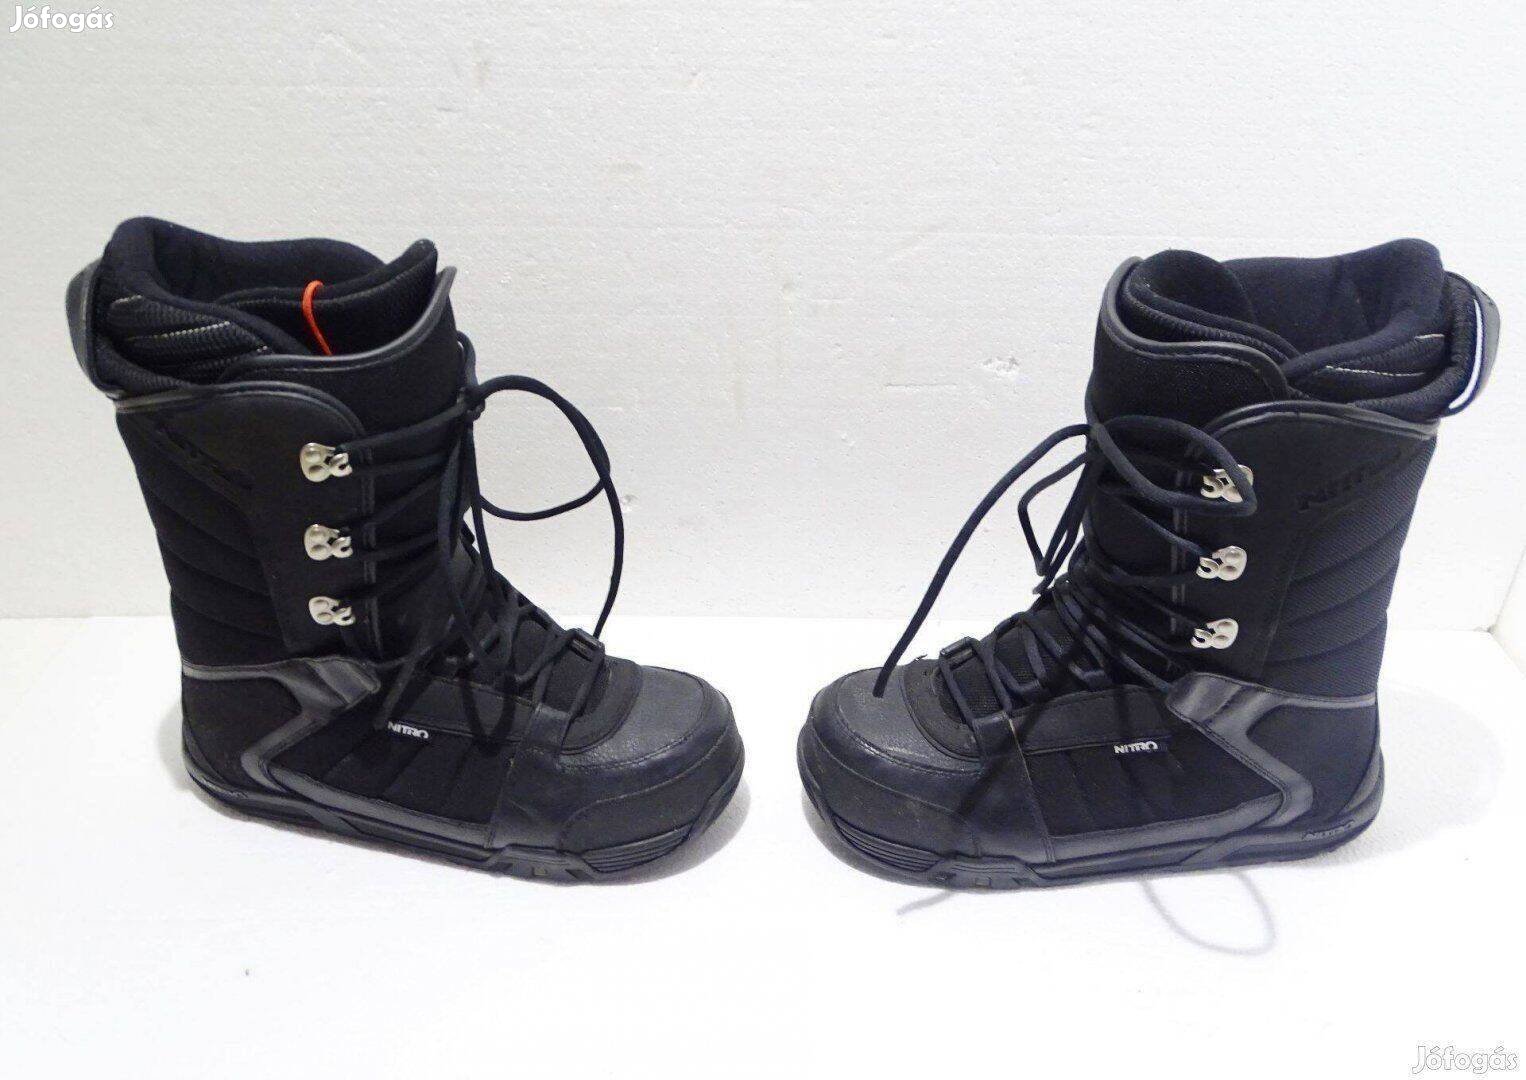 Nitro snowboard bakancs snowboard cipő csizma 46-47-es fekete